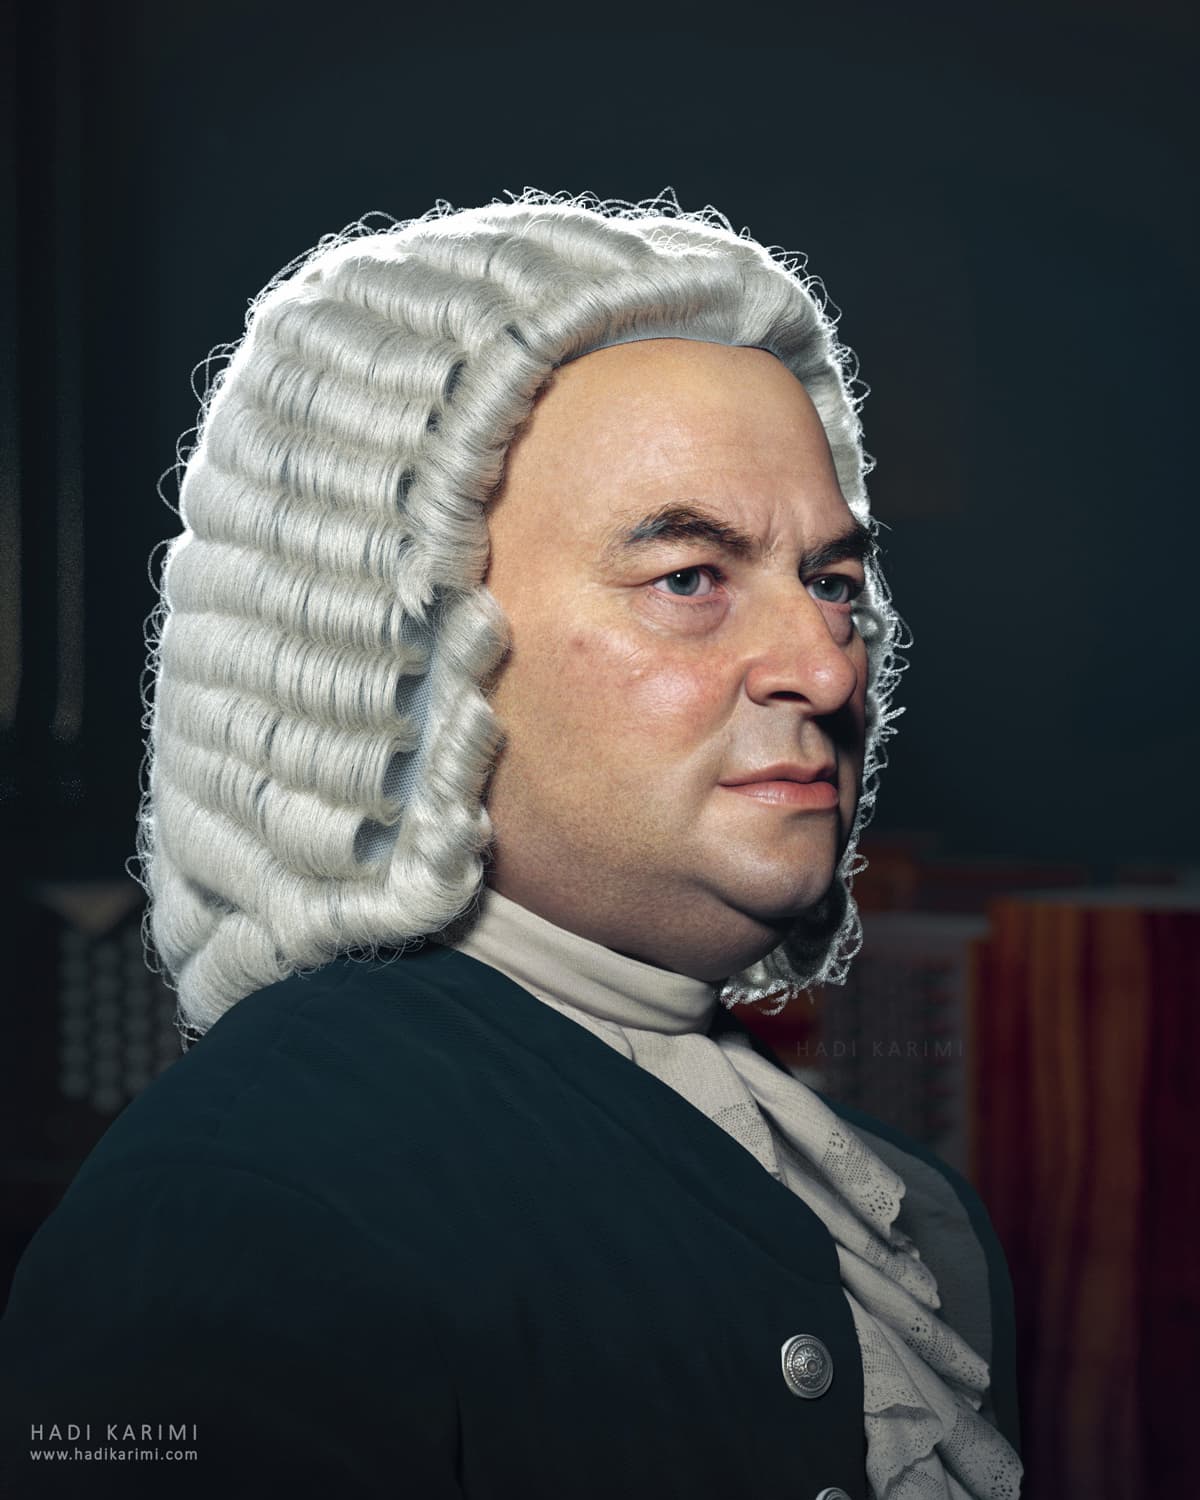 3D colourised portrait of J.S. Bach by visual artist Hadi Karimi